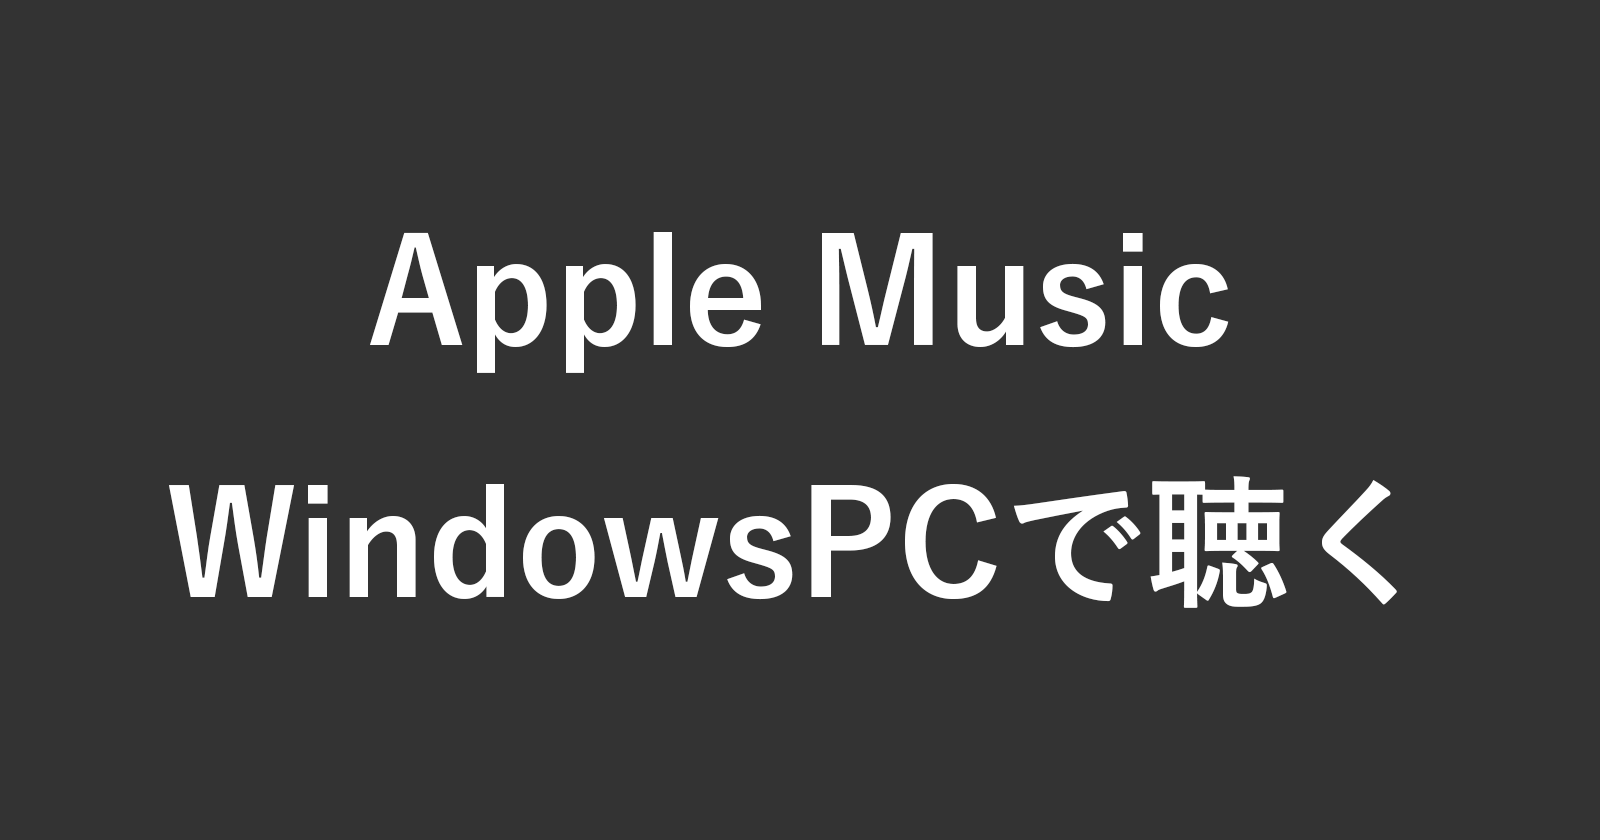 apple music on windows pc